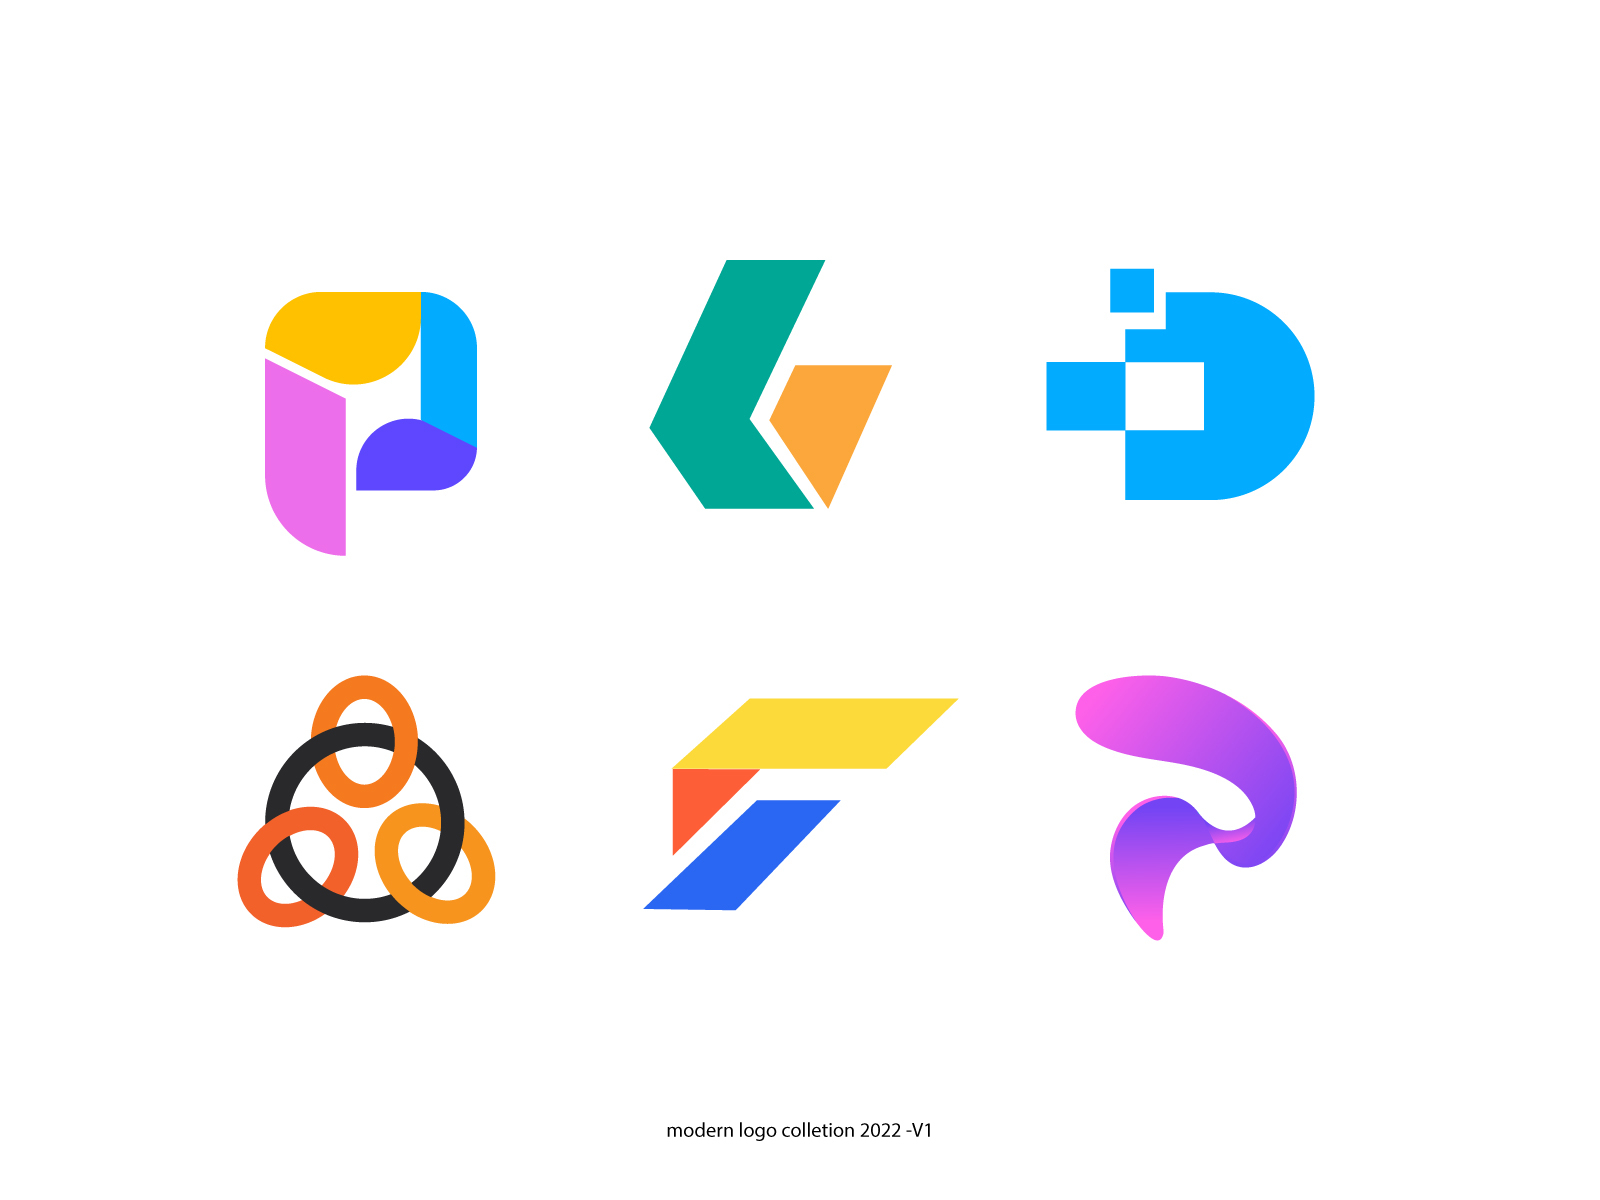 modern logo design l logo folio 2022 v1 by winmids on Dribbble